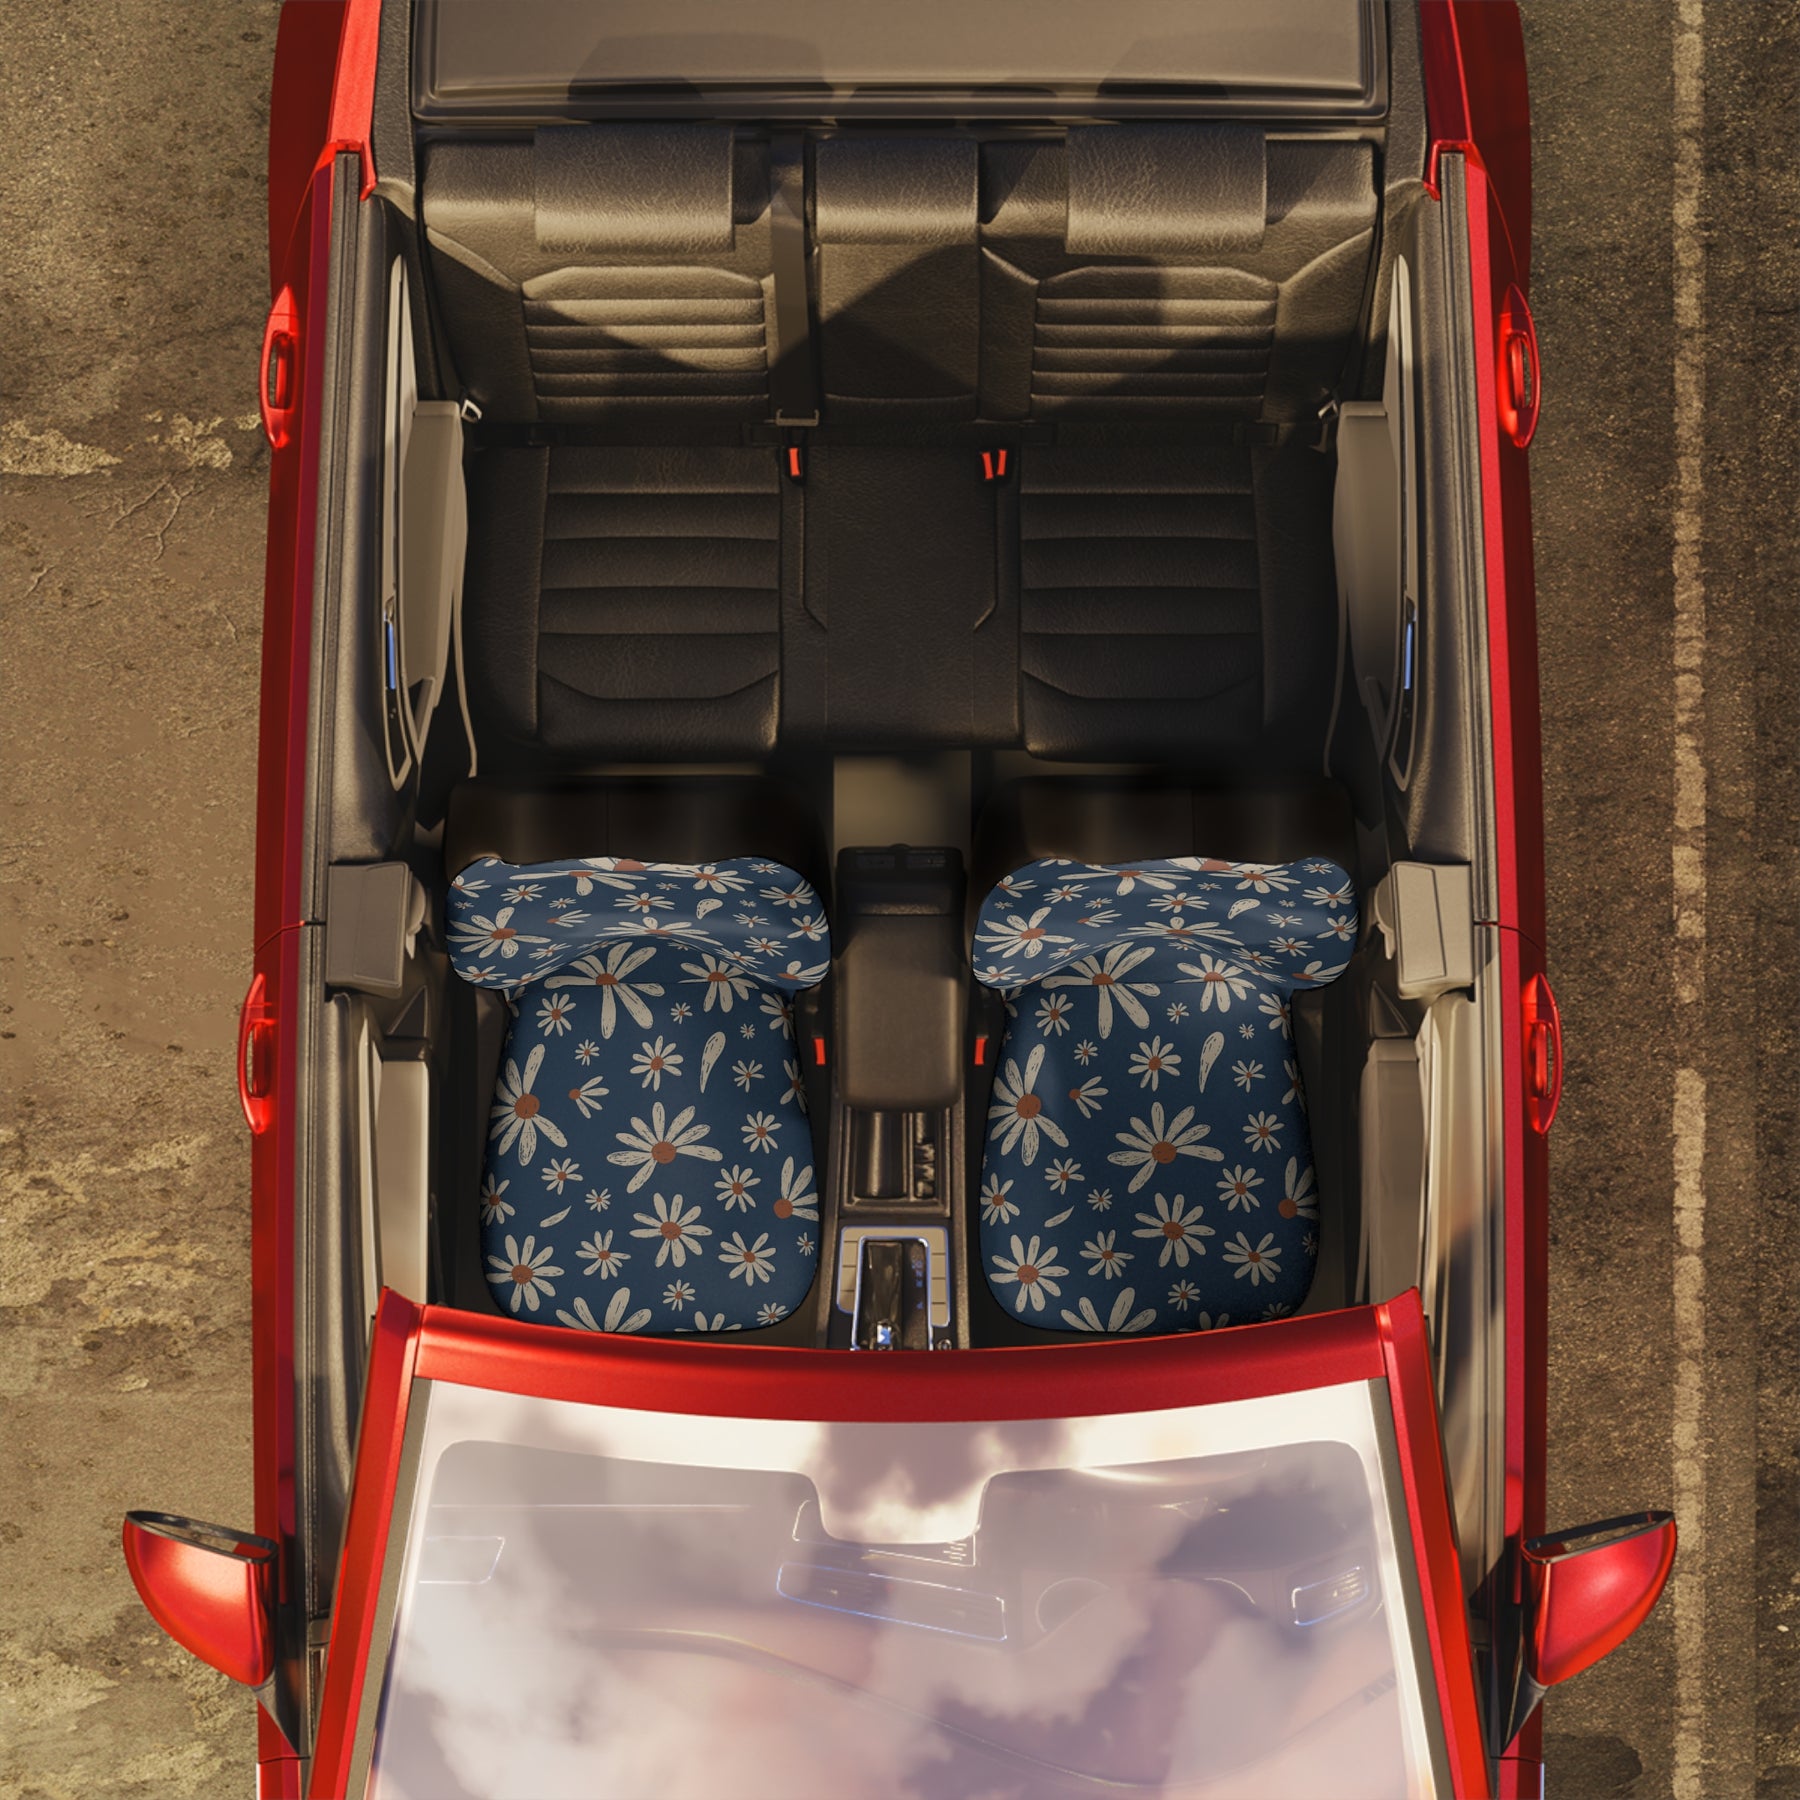 Vintage Chamomile Flower Car Seat Covers Set,Aesthetic Floral Car Seat Covers,Boho Car Decor,minimalist vehicle Interior decor for women